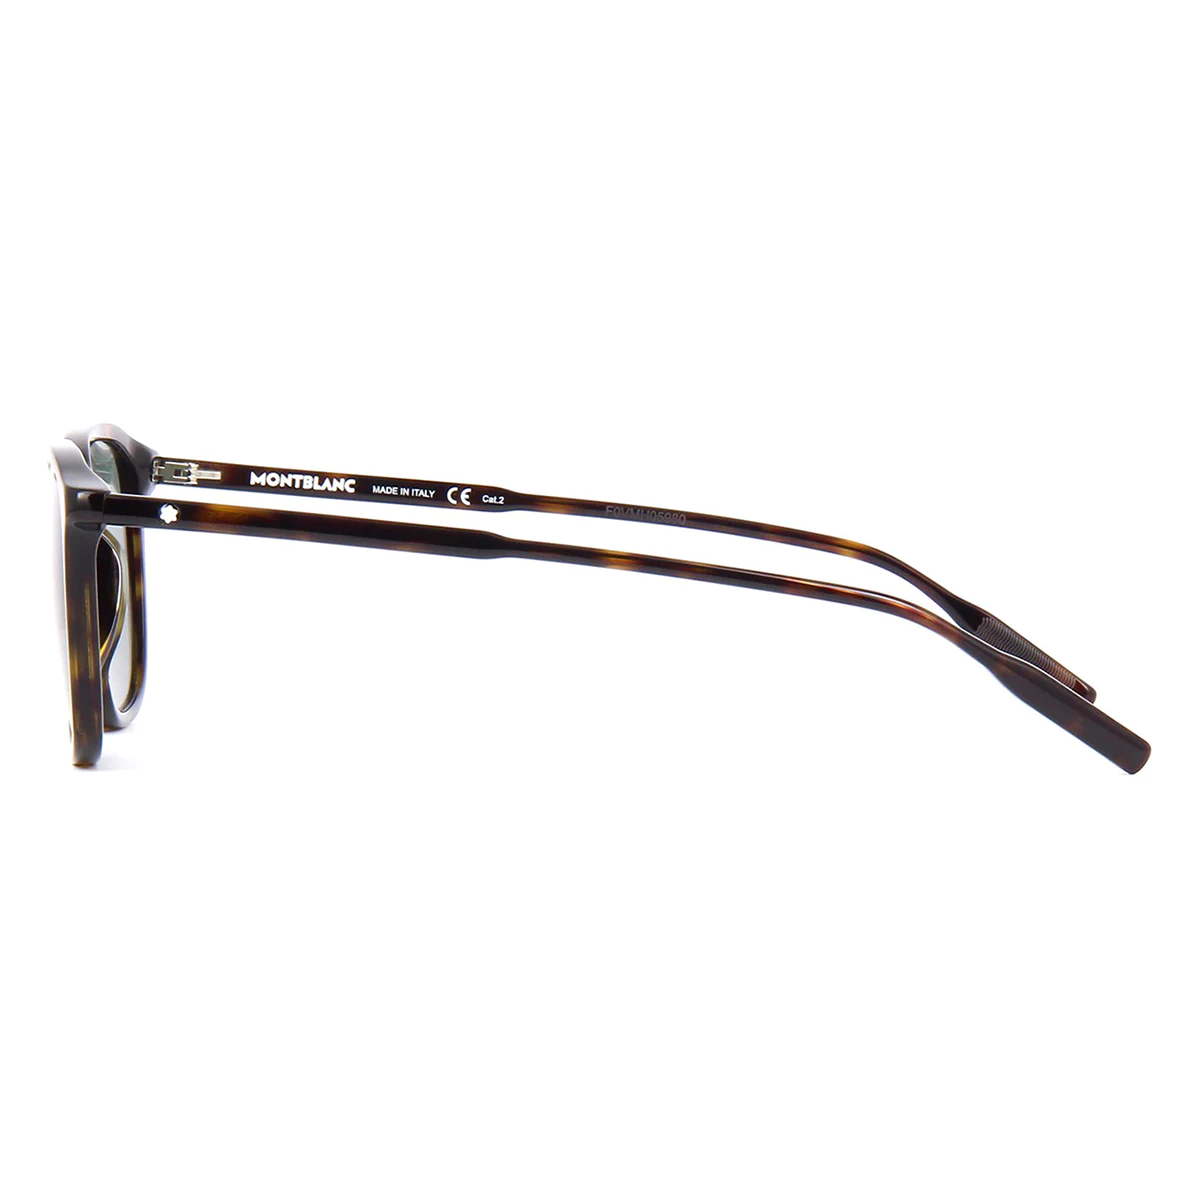 "Optorium's Mont Blanc MB0082S men's shell sunglasses - stylish, top branded, full frame square design with non-polarized grey lenses."